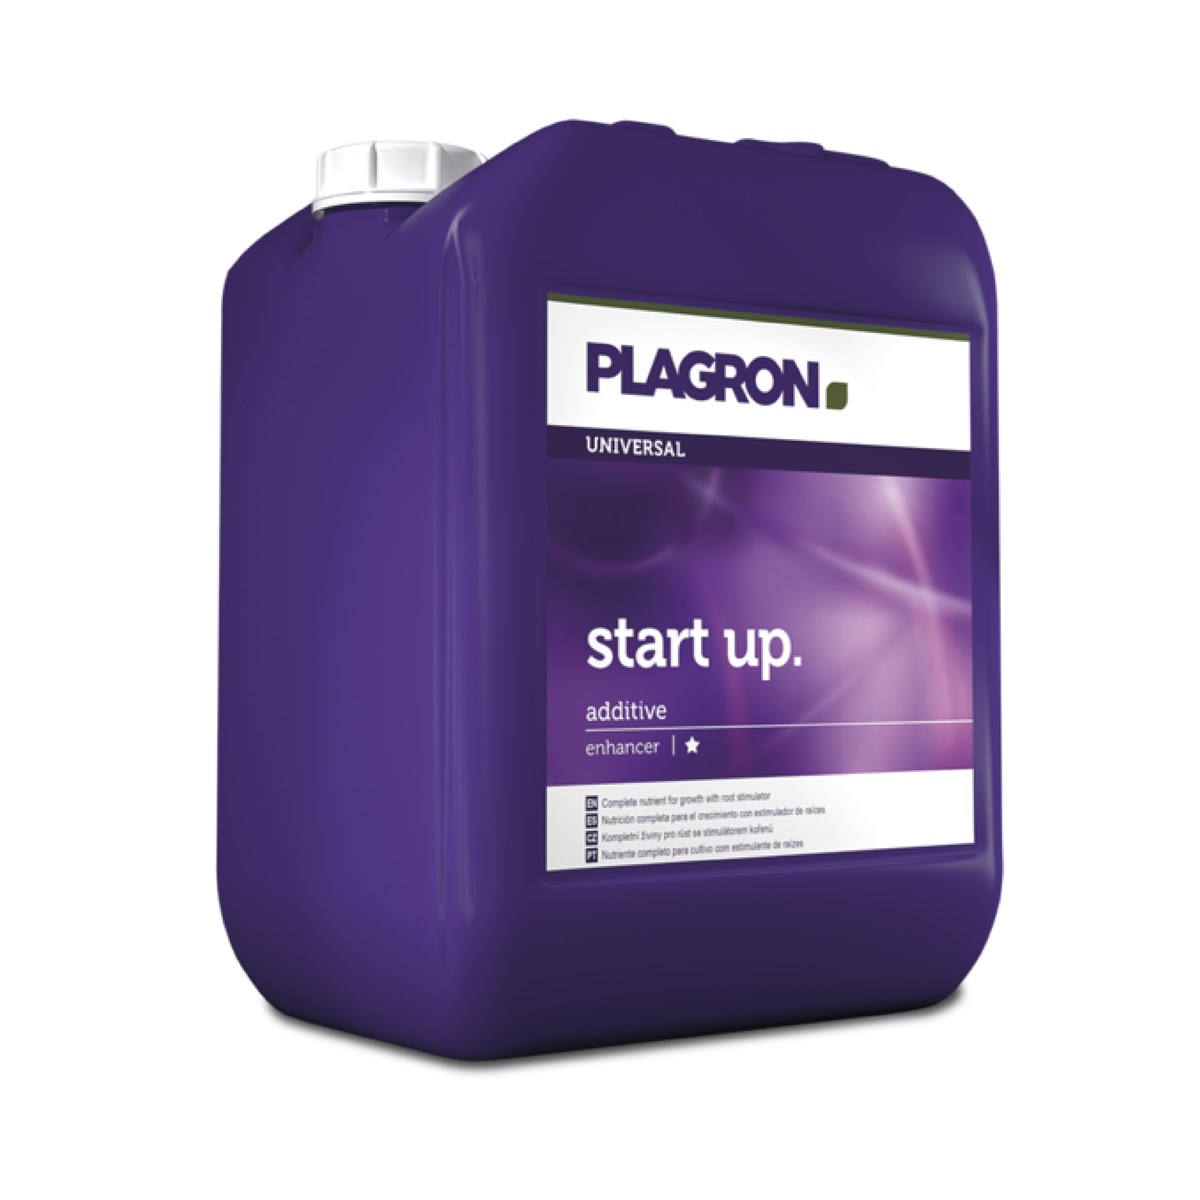 Plagron Start Up